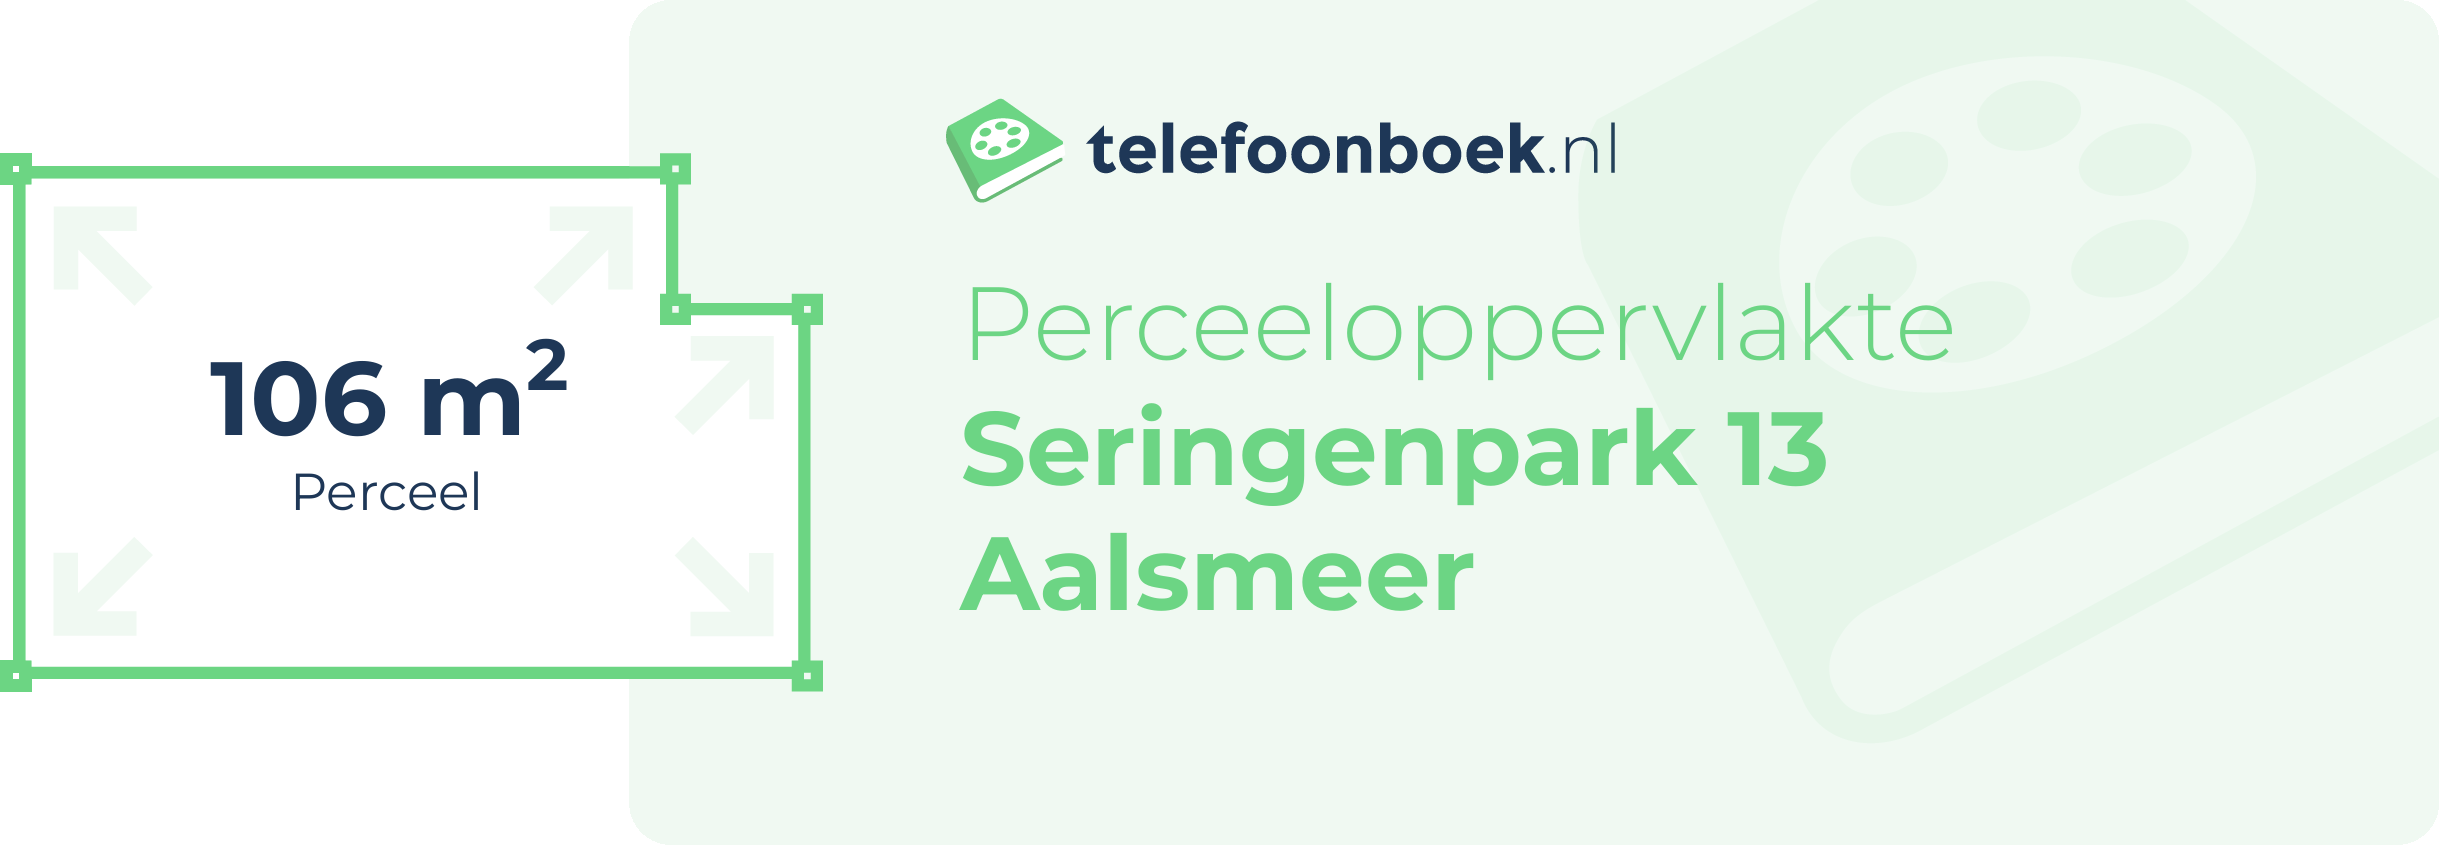 Perceeloppervlakte Seringenpark 13 Aalsmeer